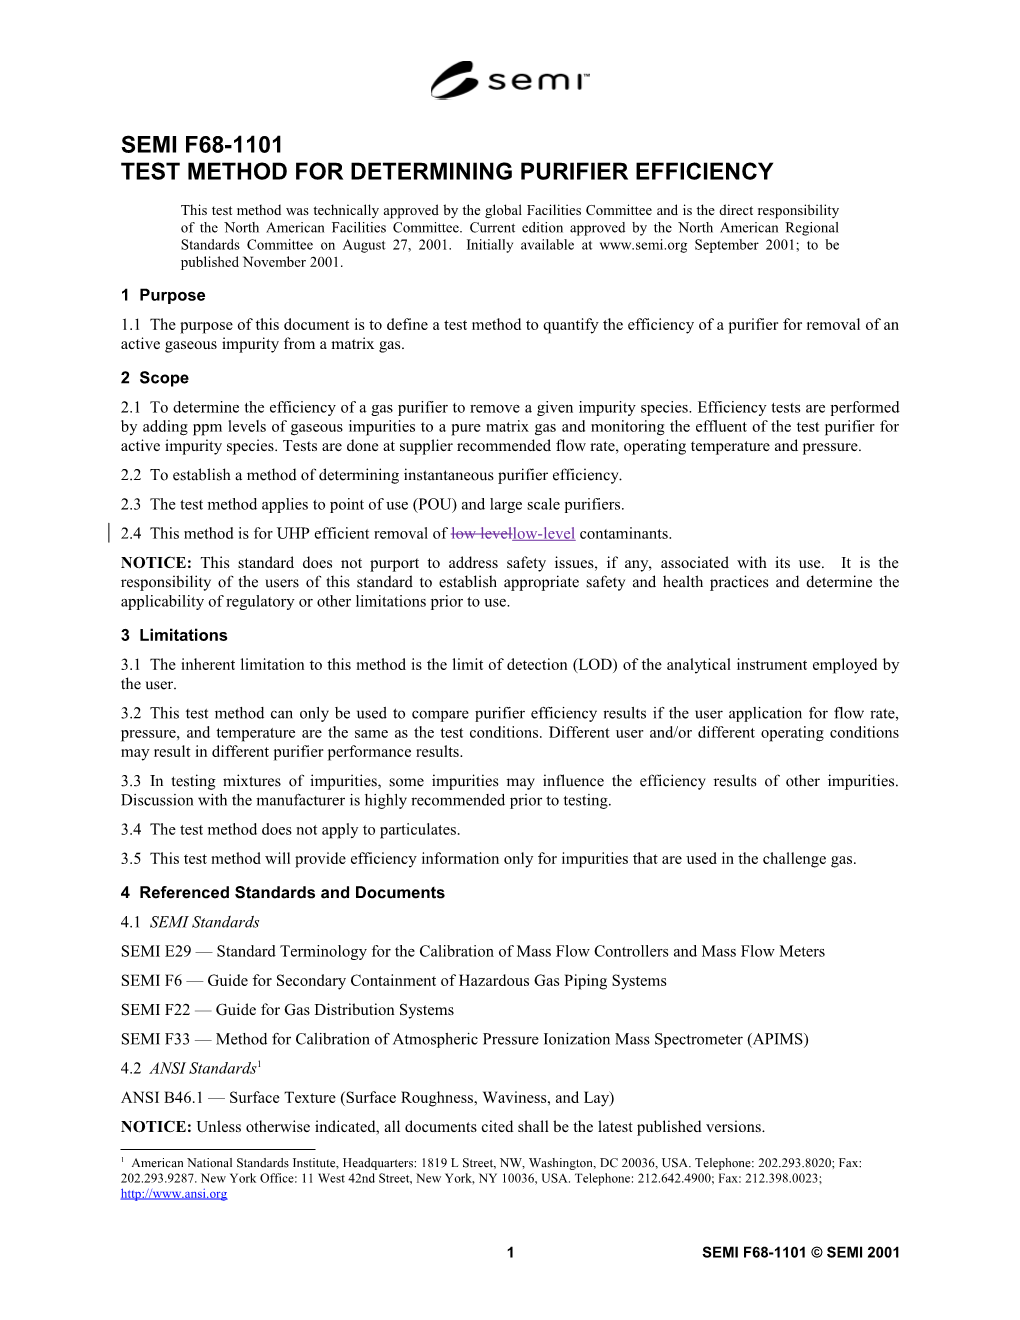 Test Method for Determining Purifier Efficiency